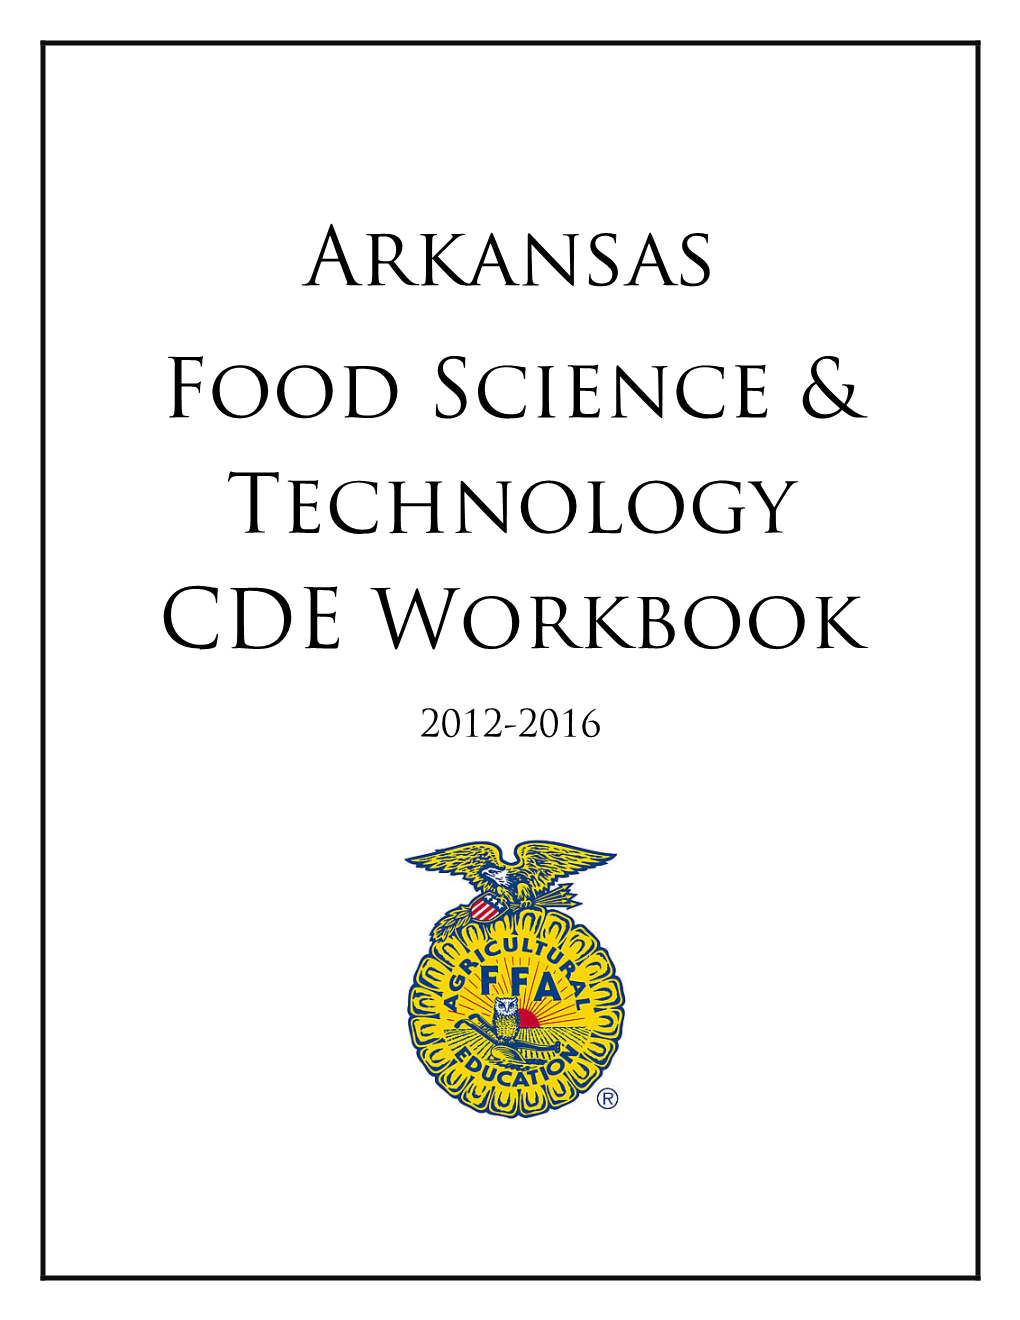 Arkansas Food Science & Technology CDE Workbook